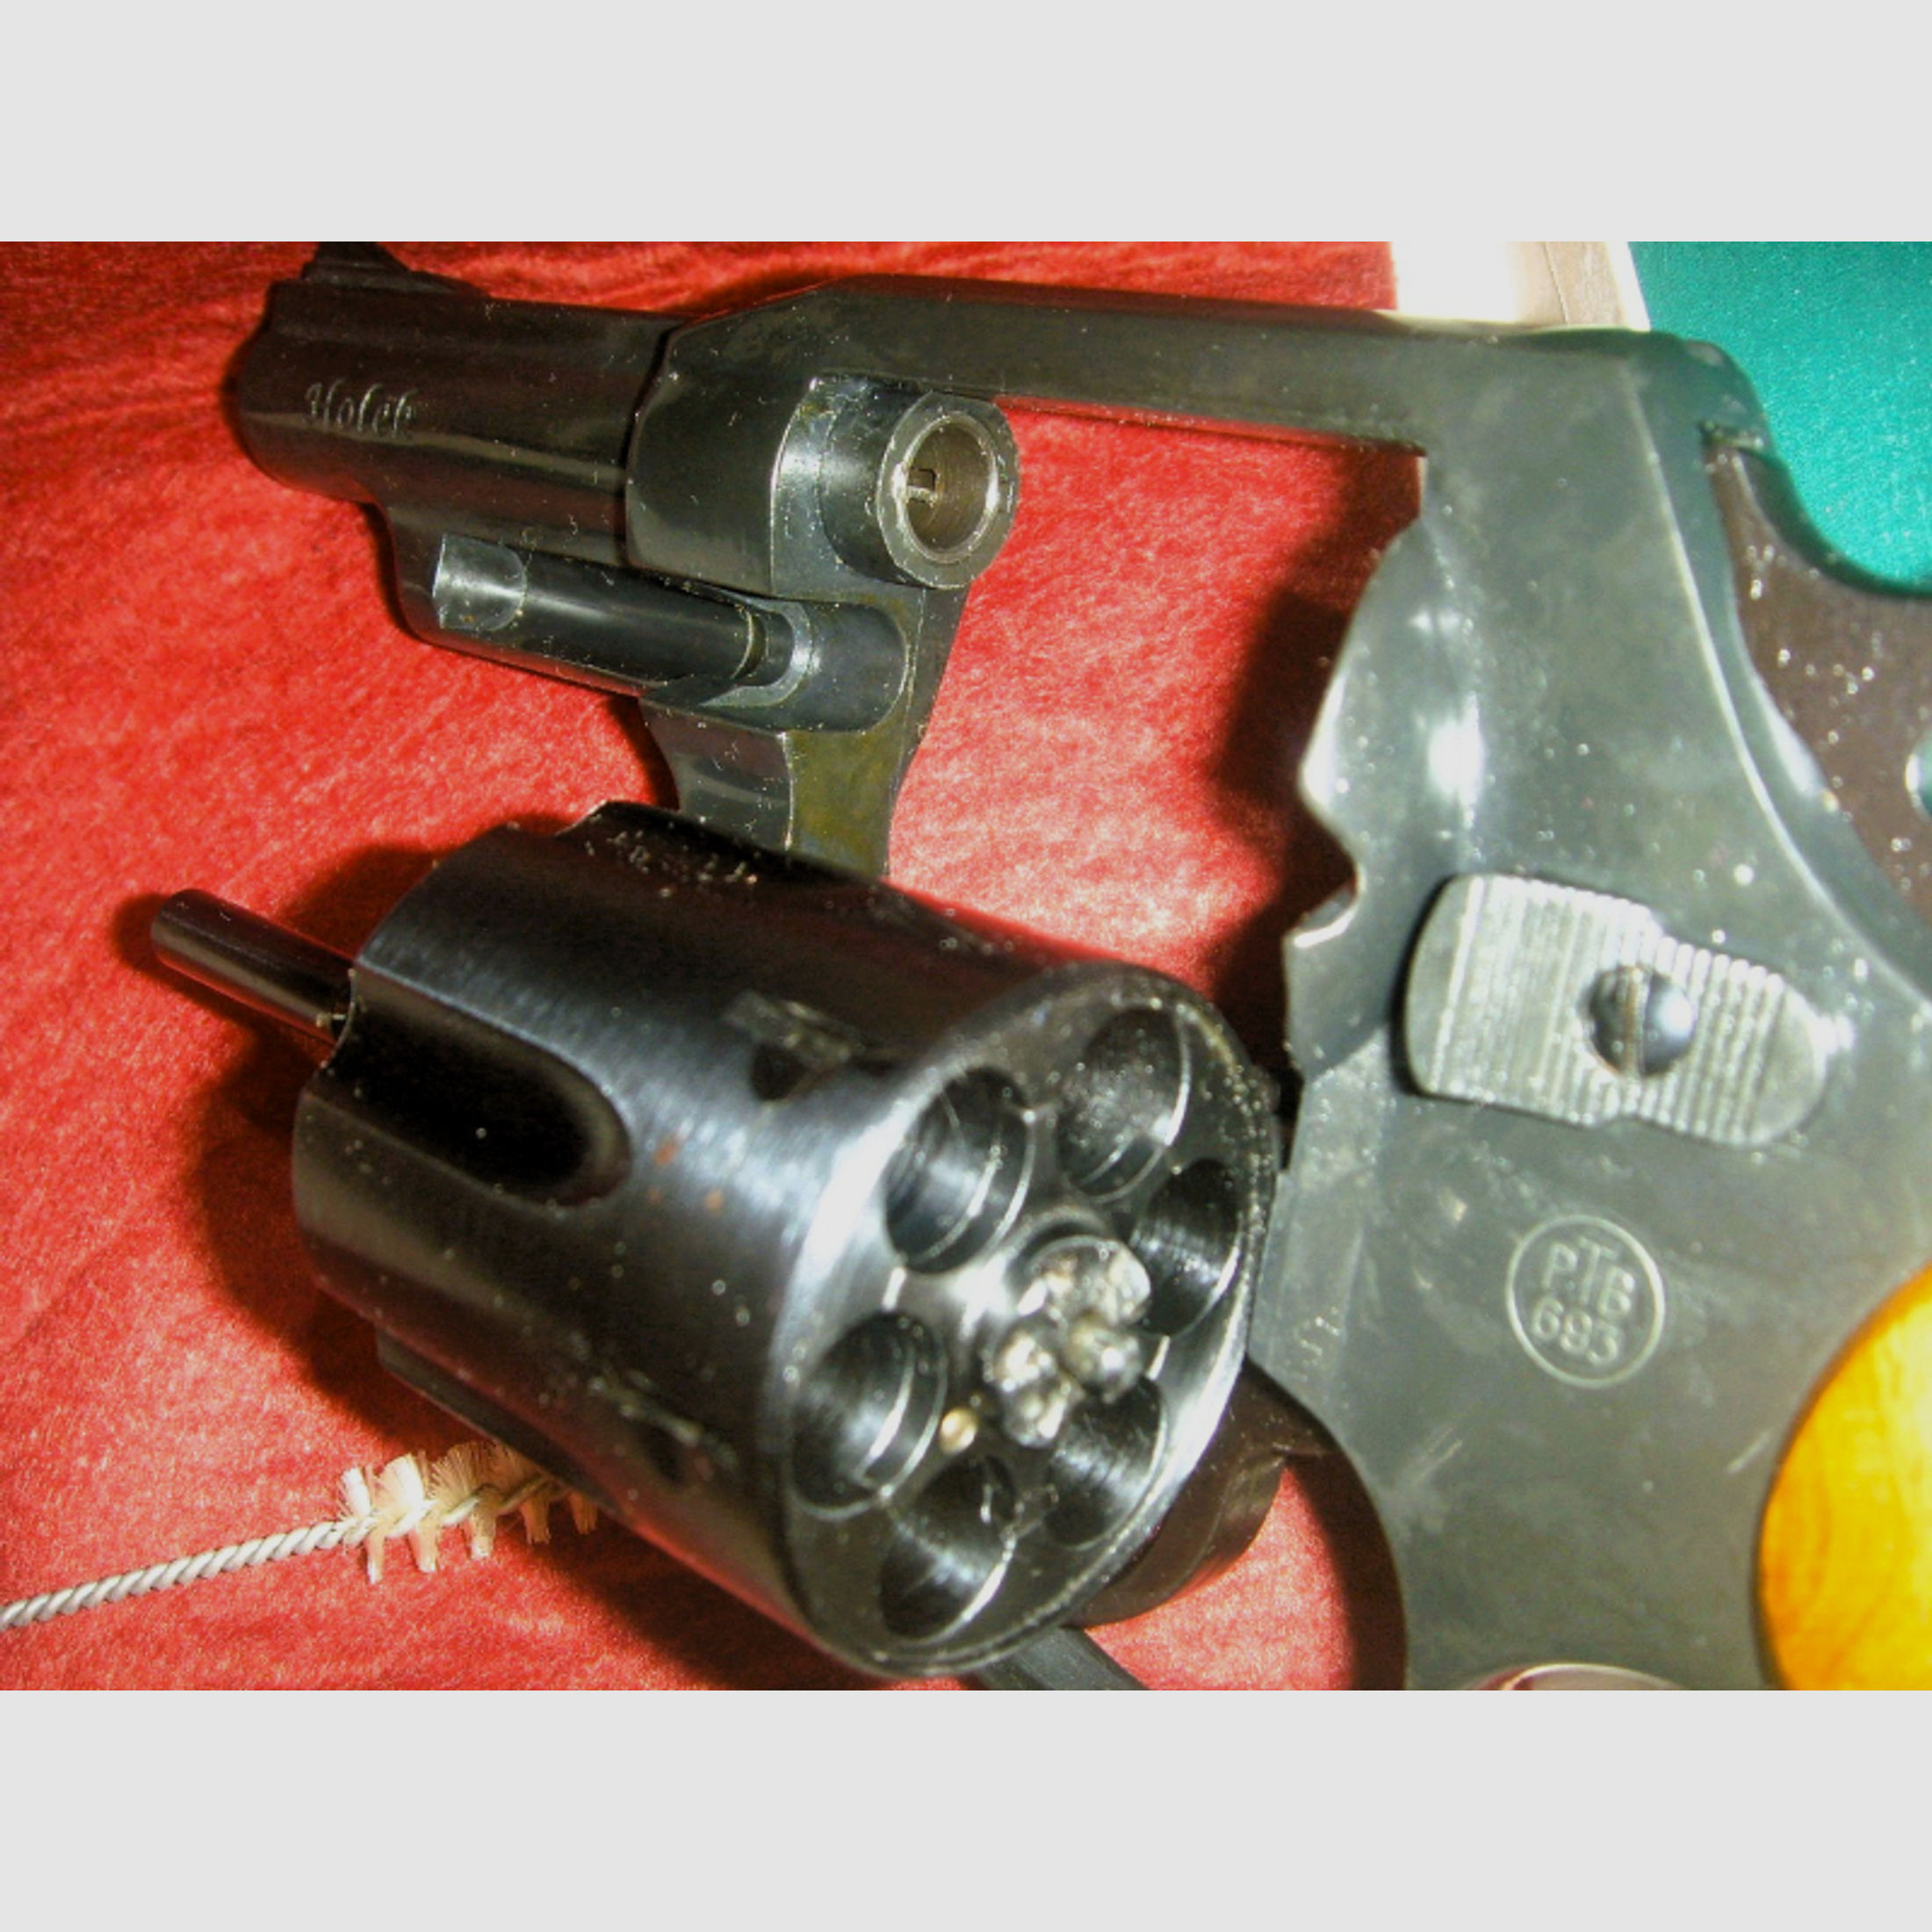 ALFA-PROJ Revolver Holek Mod. 030 m. orig. Holzgriffschalen, Stahl-Trommel etc., OVP komplett